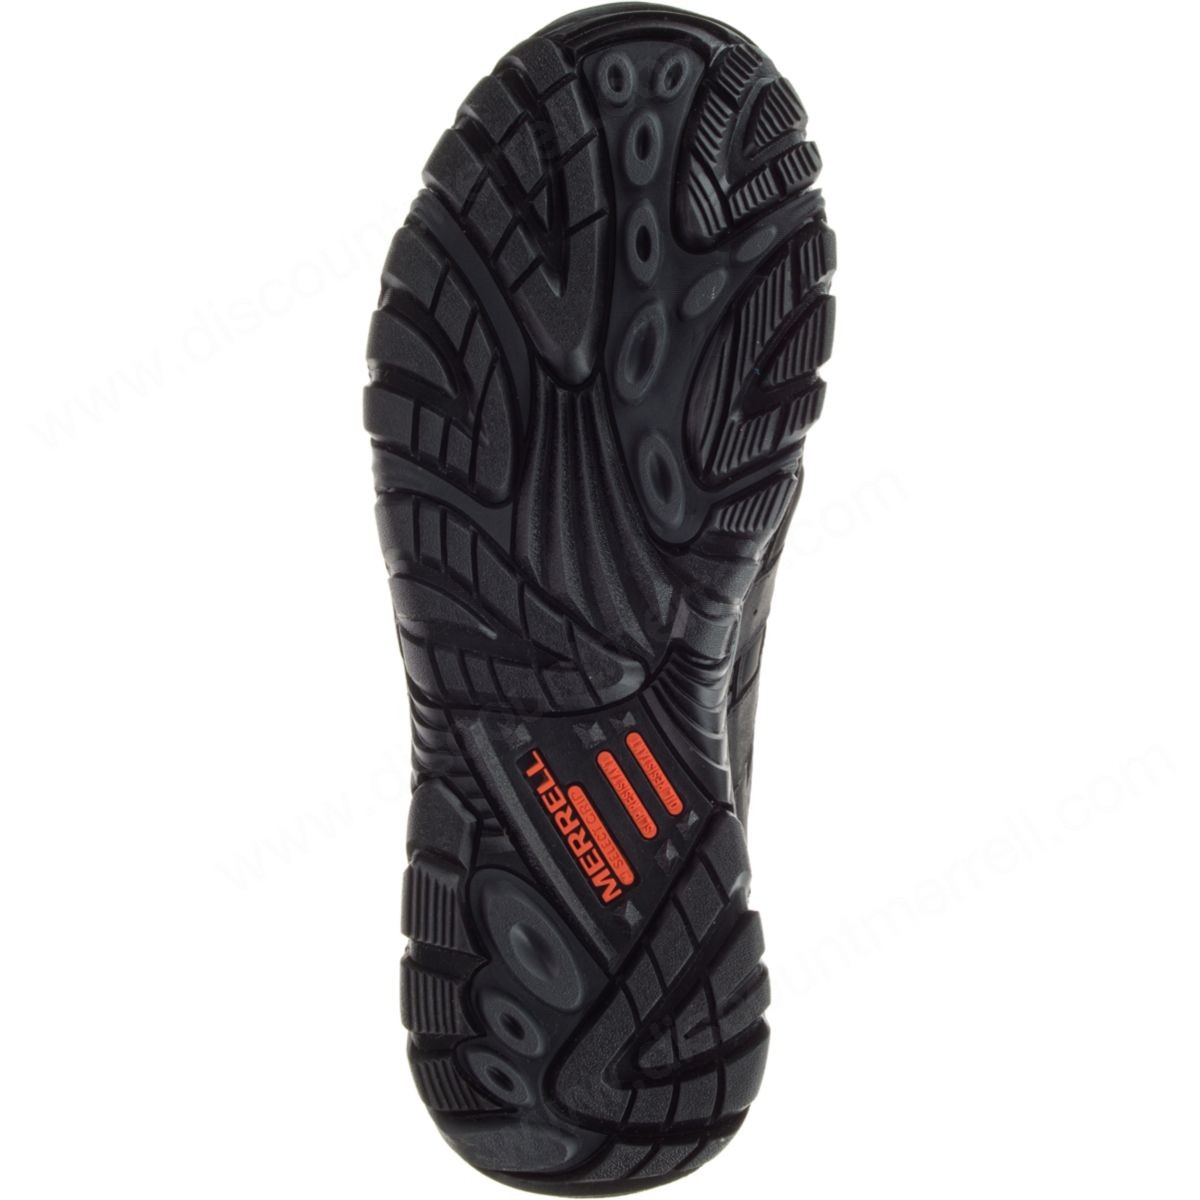 Merrell Man's Moab Vent Waterproof Comp Toe Work Shoe Black - -1